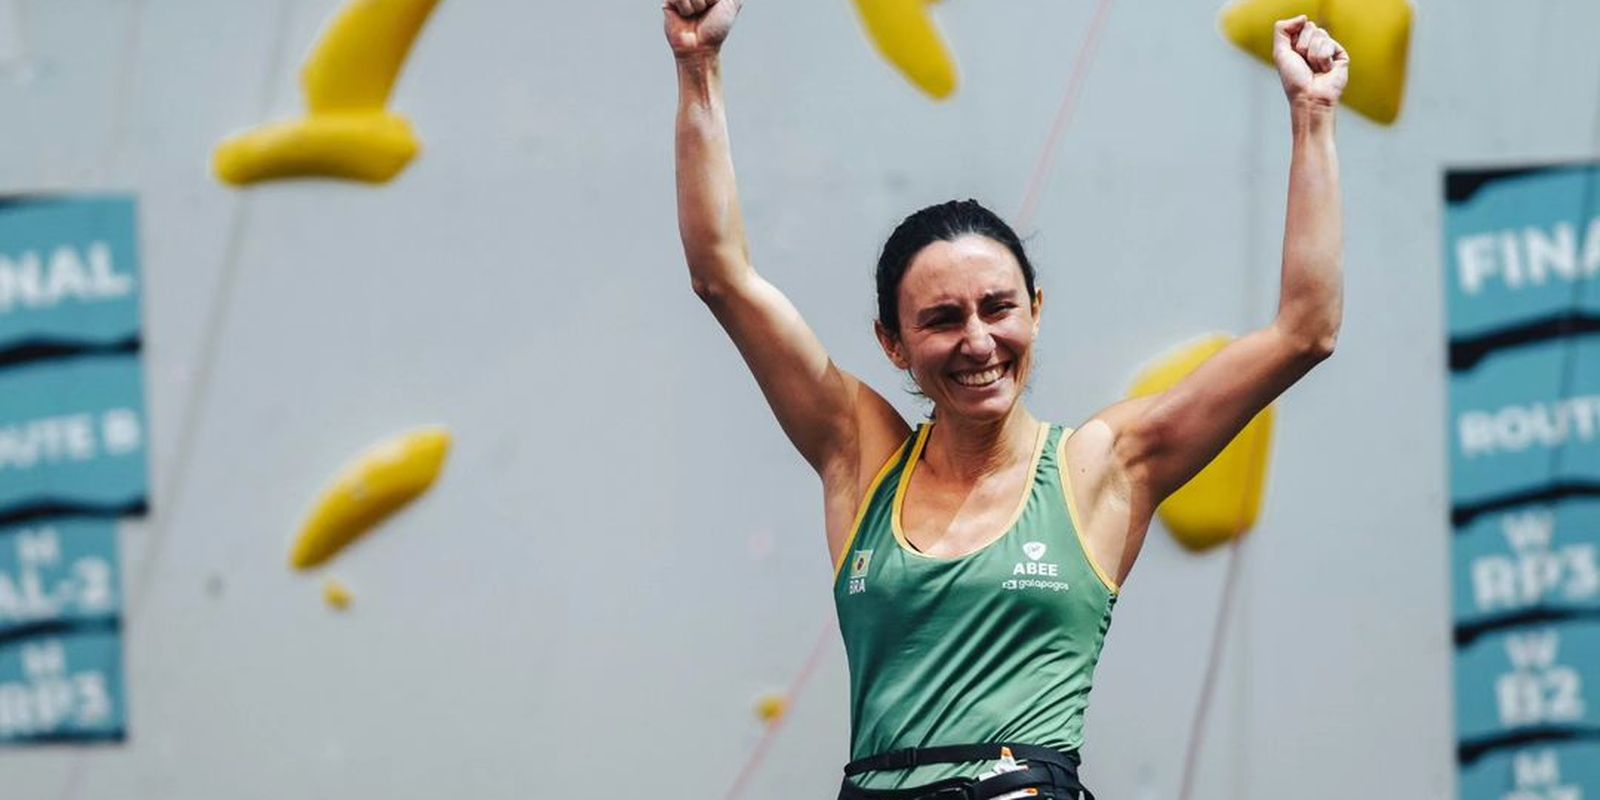 Marina Dias wins an unprecedented gold for Brazil at the World Paraclimbing Championships